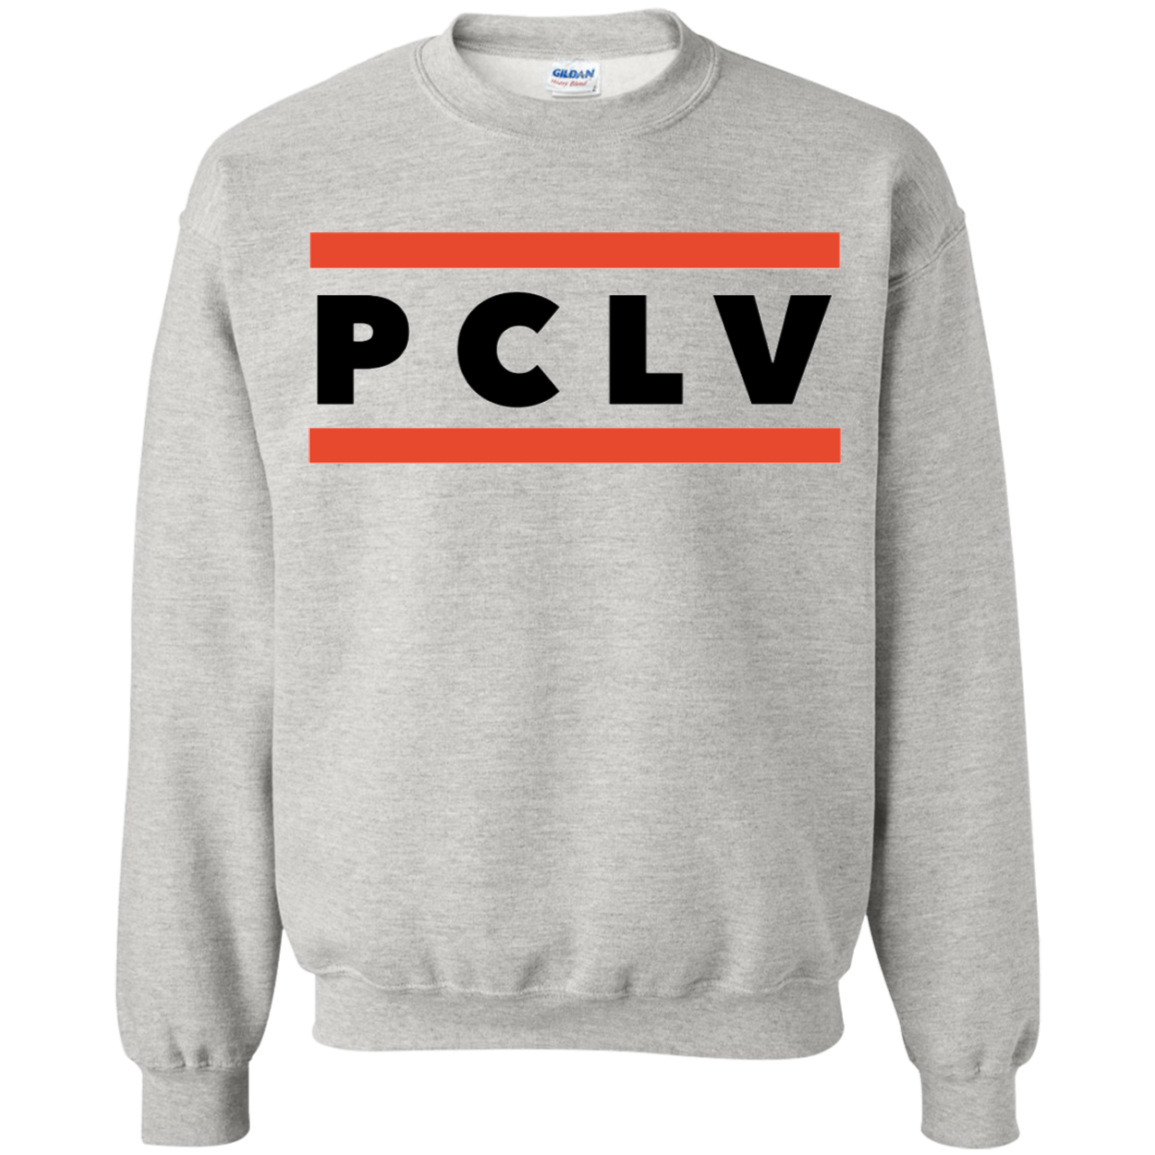 PCLV Crewneck Sweatshirt